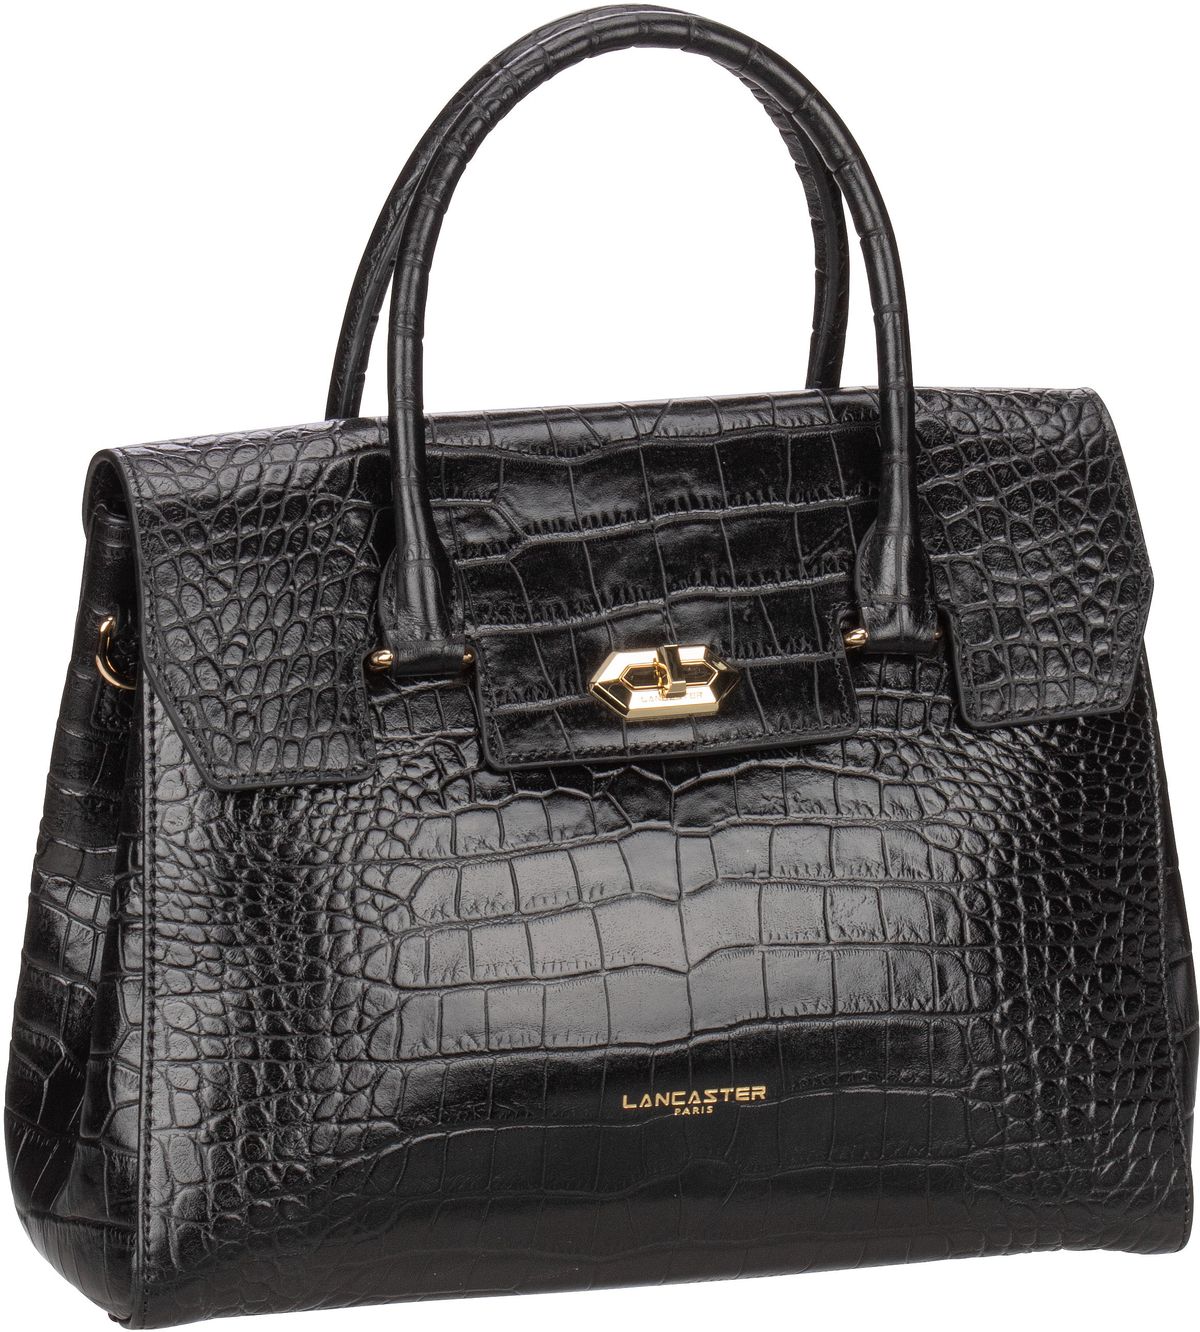 Lancaster Exotic Lézard & Croco Handbag - Black